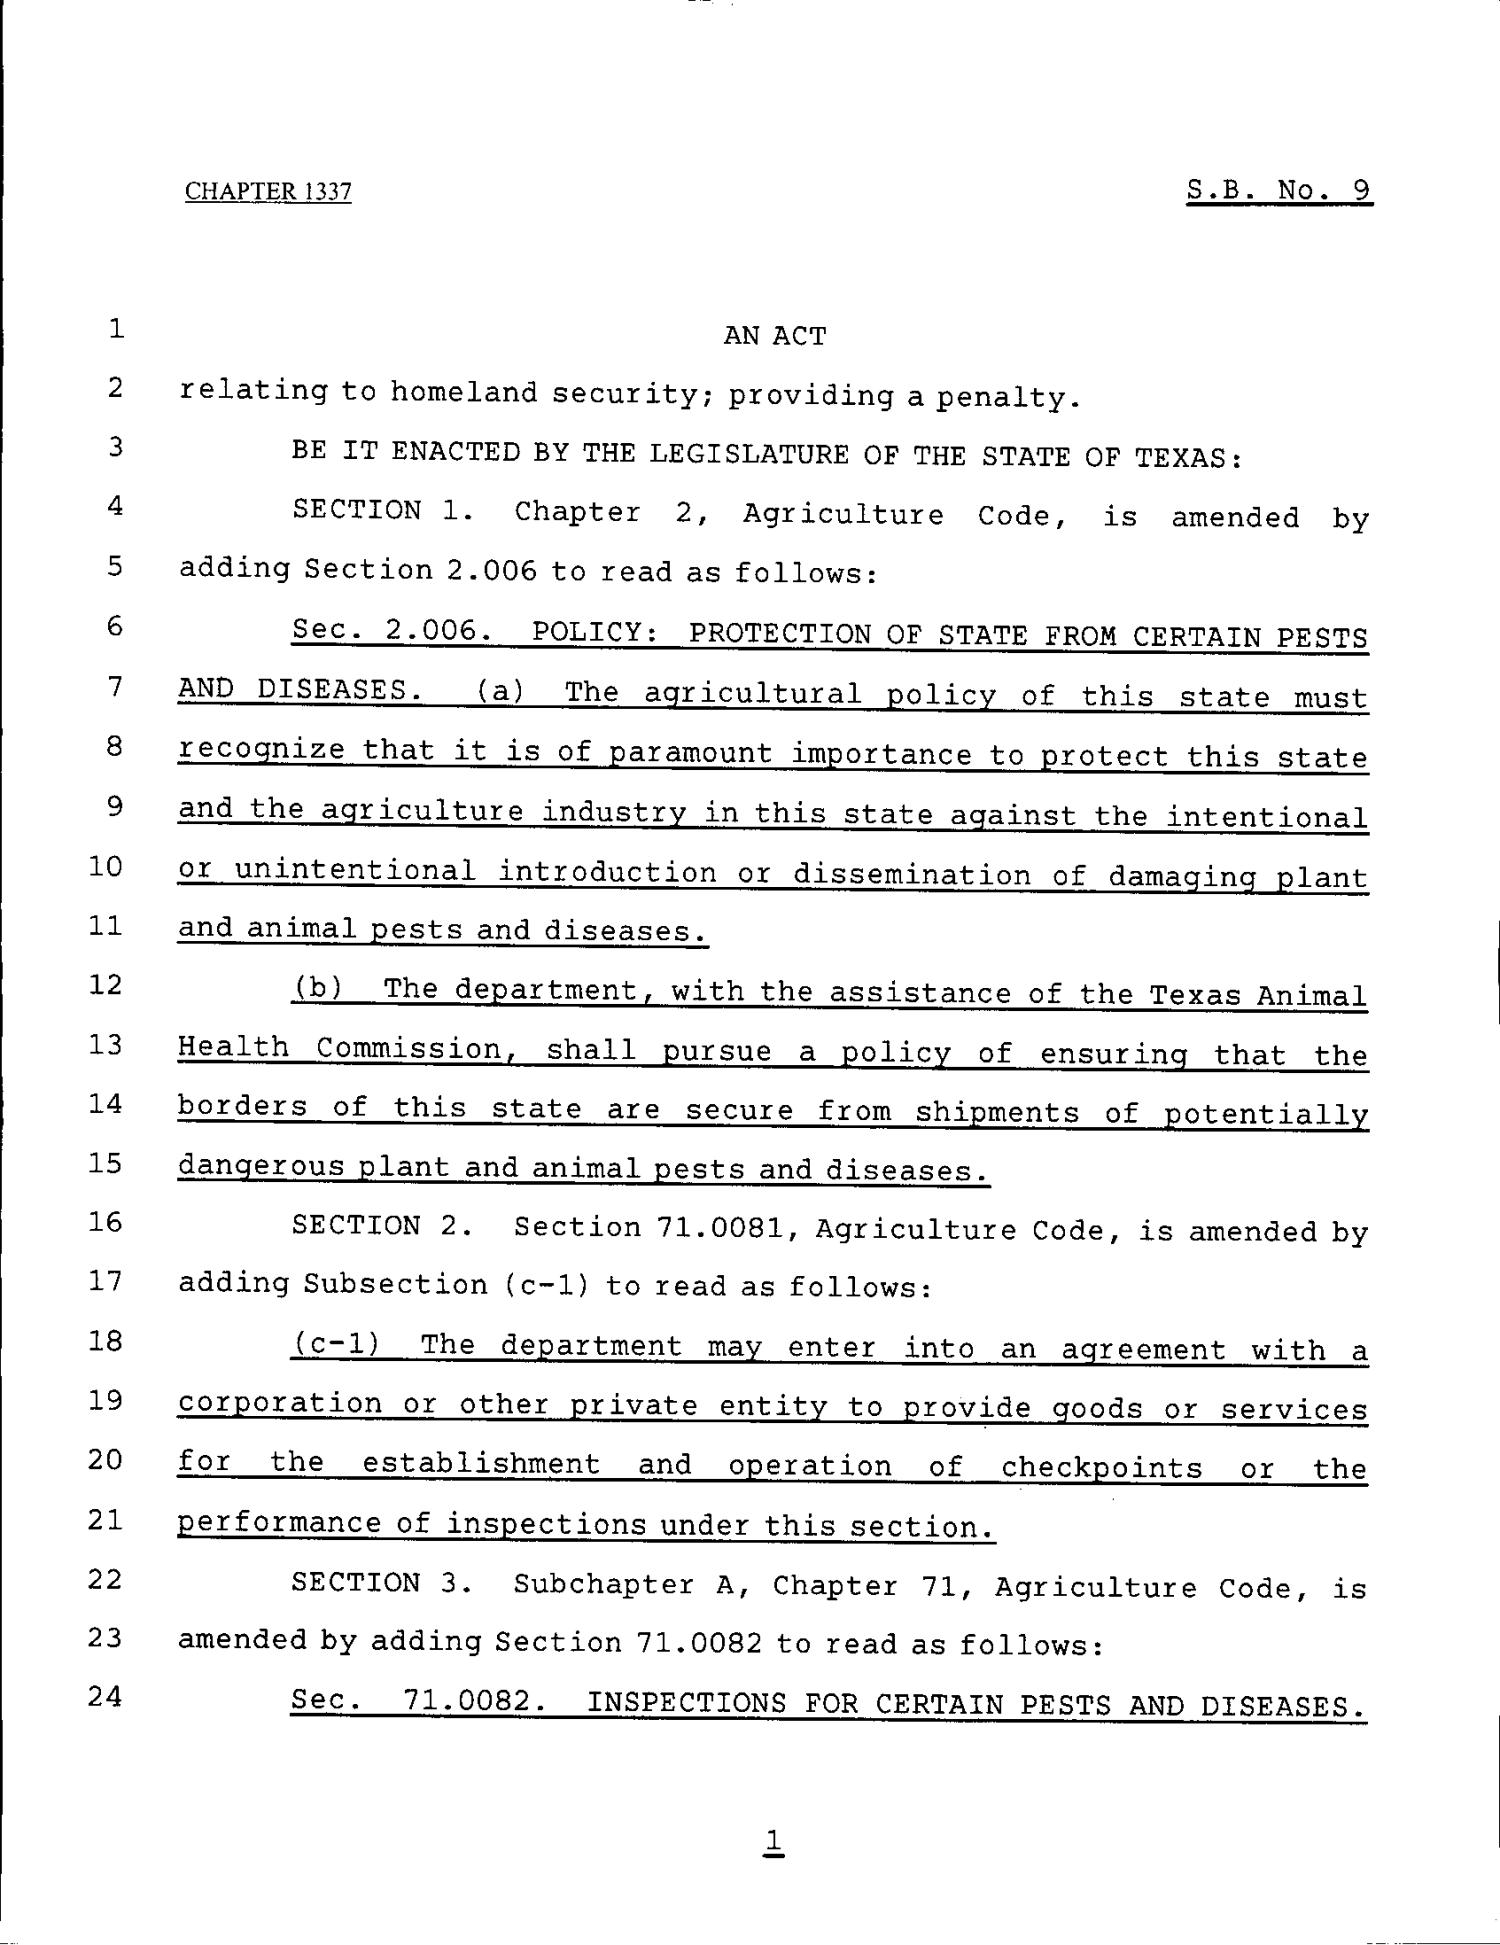 79th Texas Legislature, Regular Session, Senate Bill 9, Chapter 1337